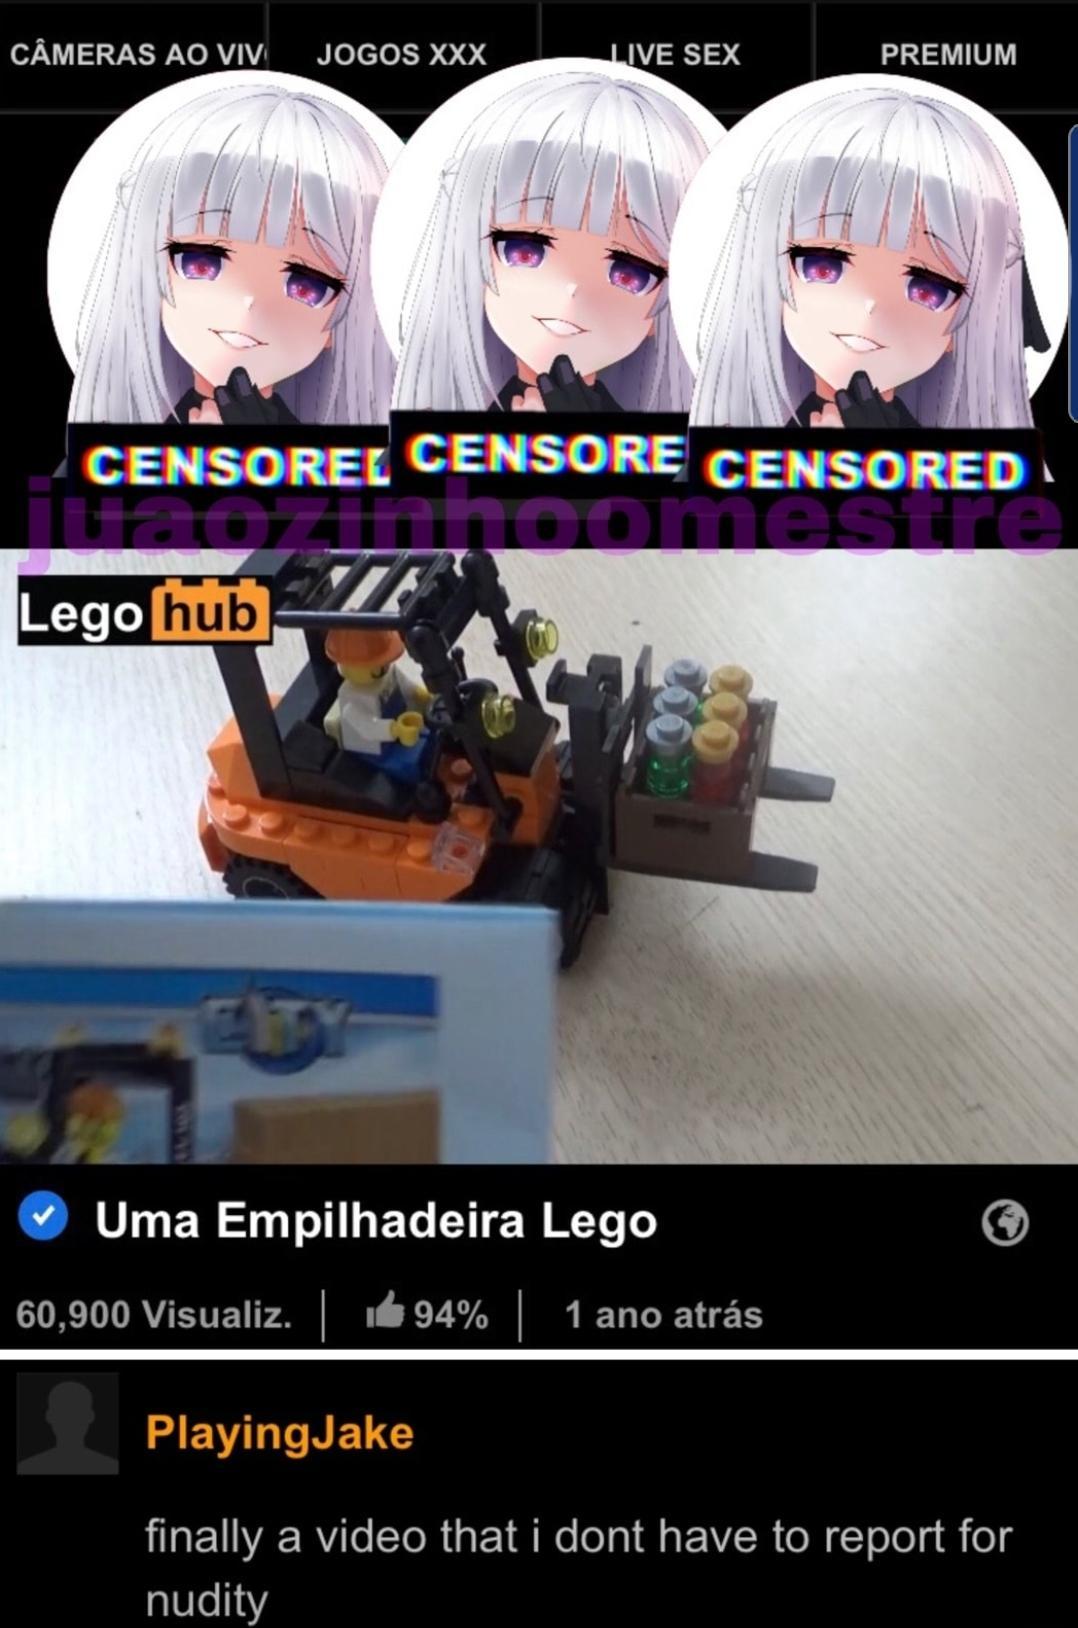 Lego>>>>>porn - meme